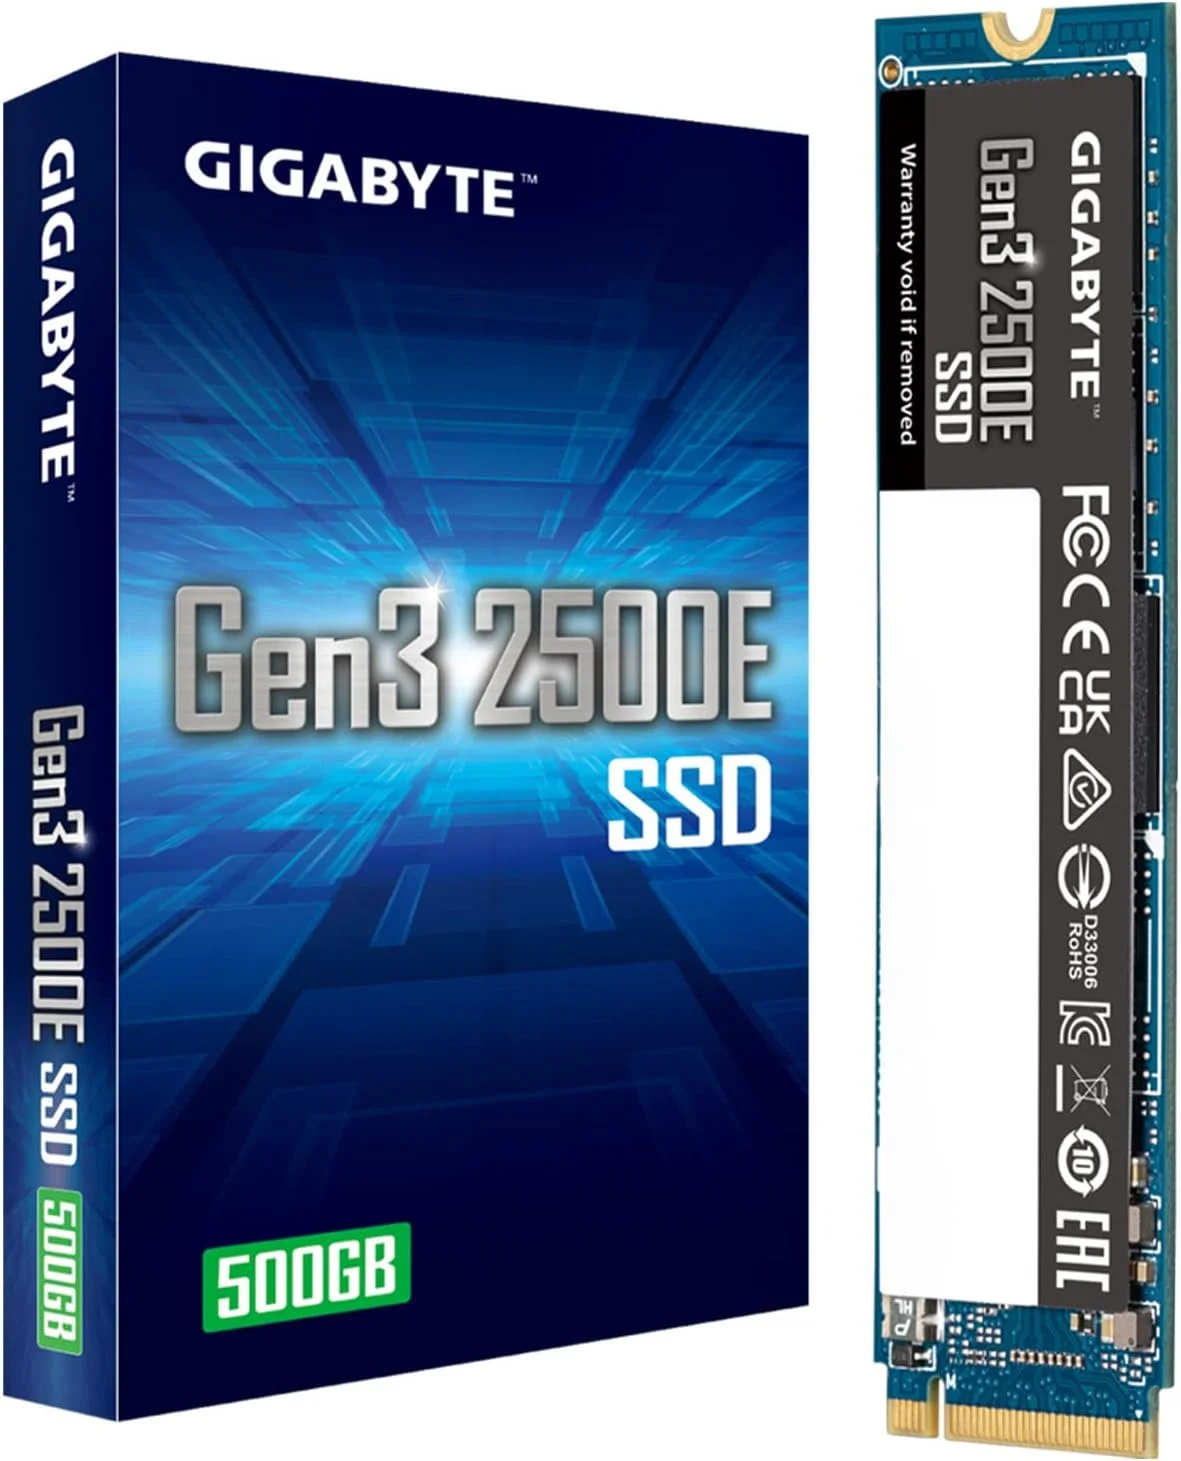 Gigabyte Gen3 2500E SSD de 500 GB NVMe M.2 G325E500G